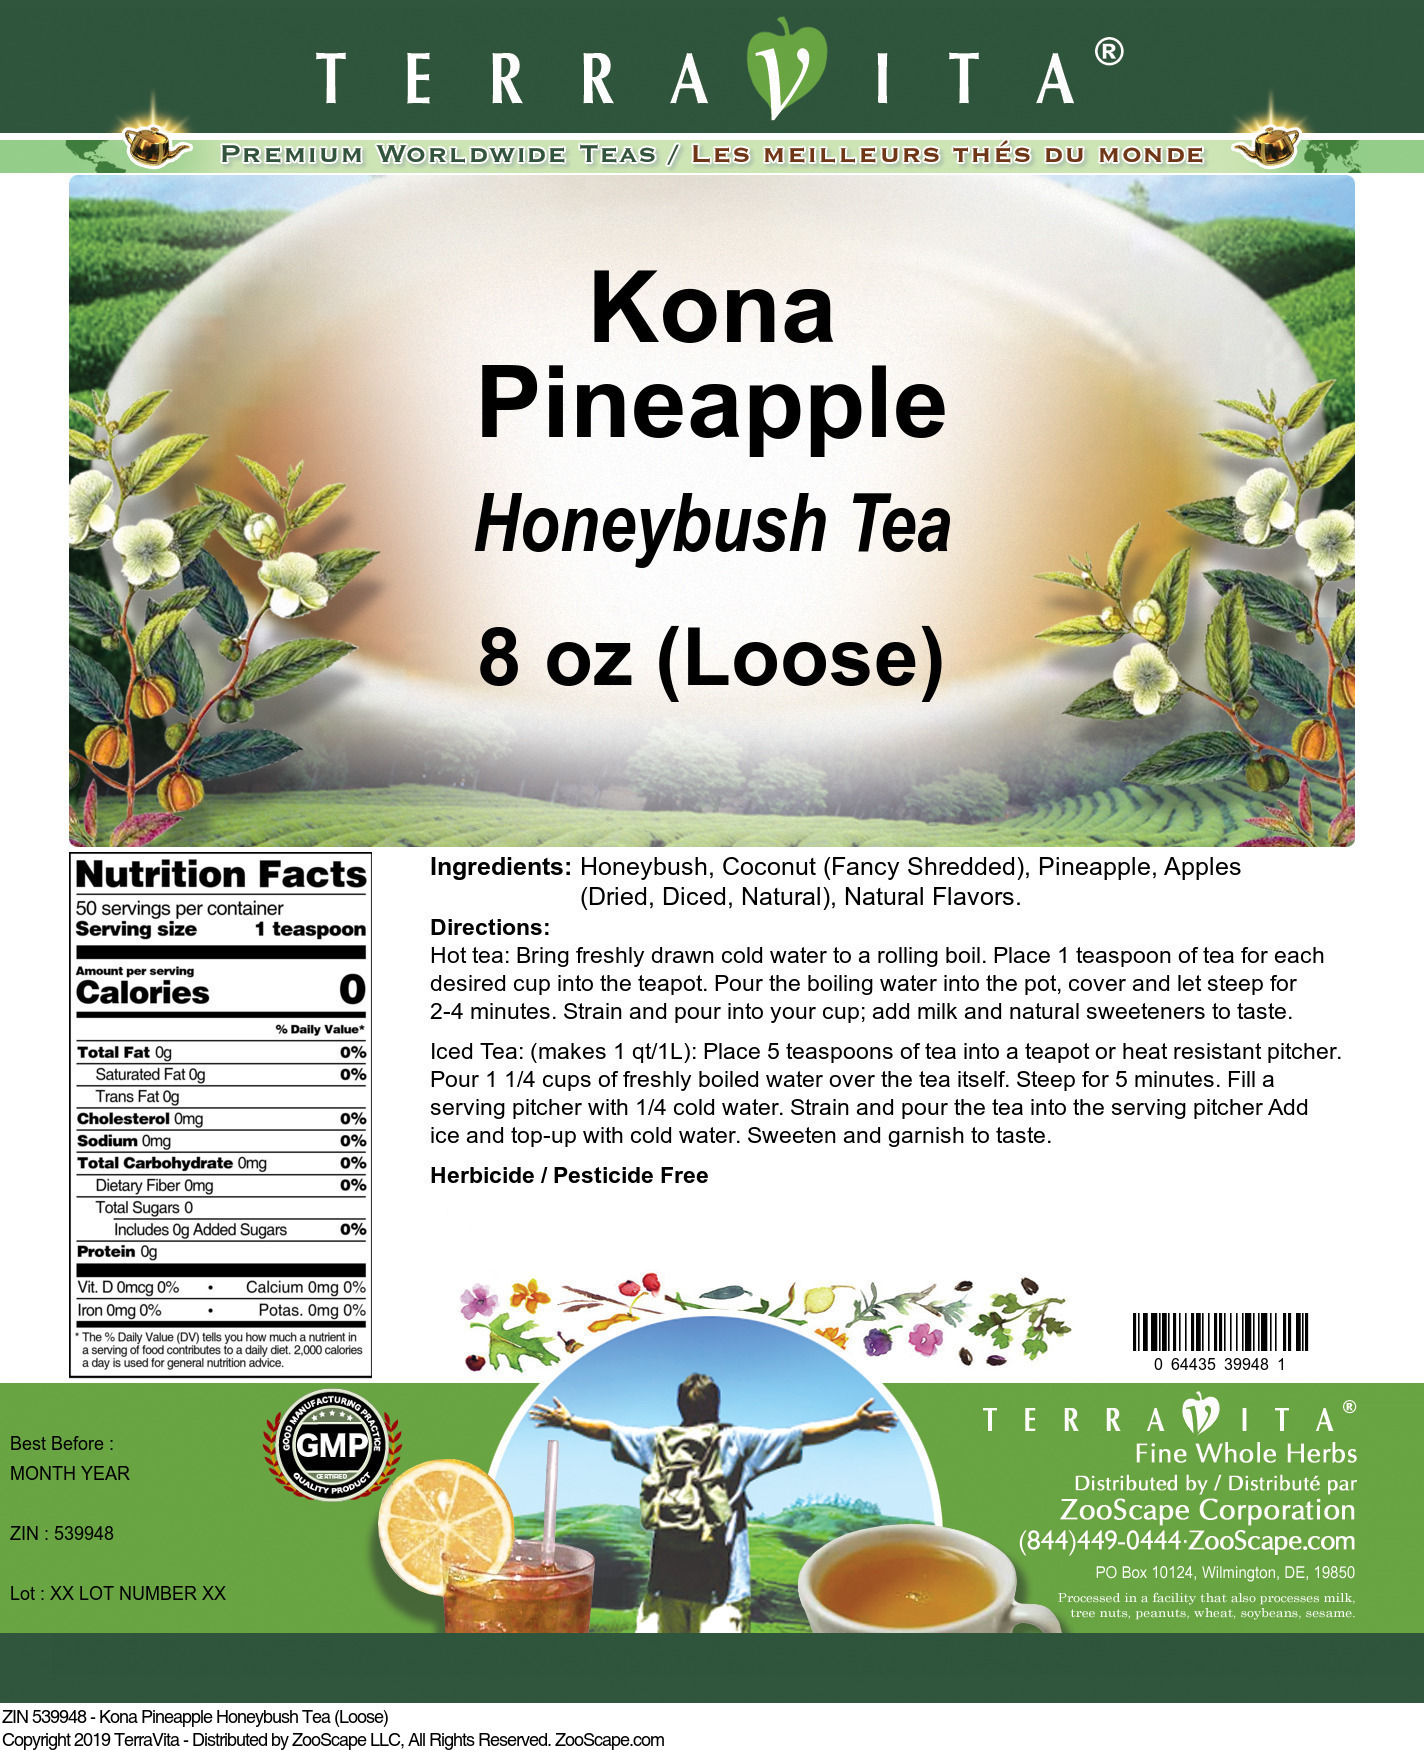 Kona Pineapple Honeybush Tea (Loose) - Label